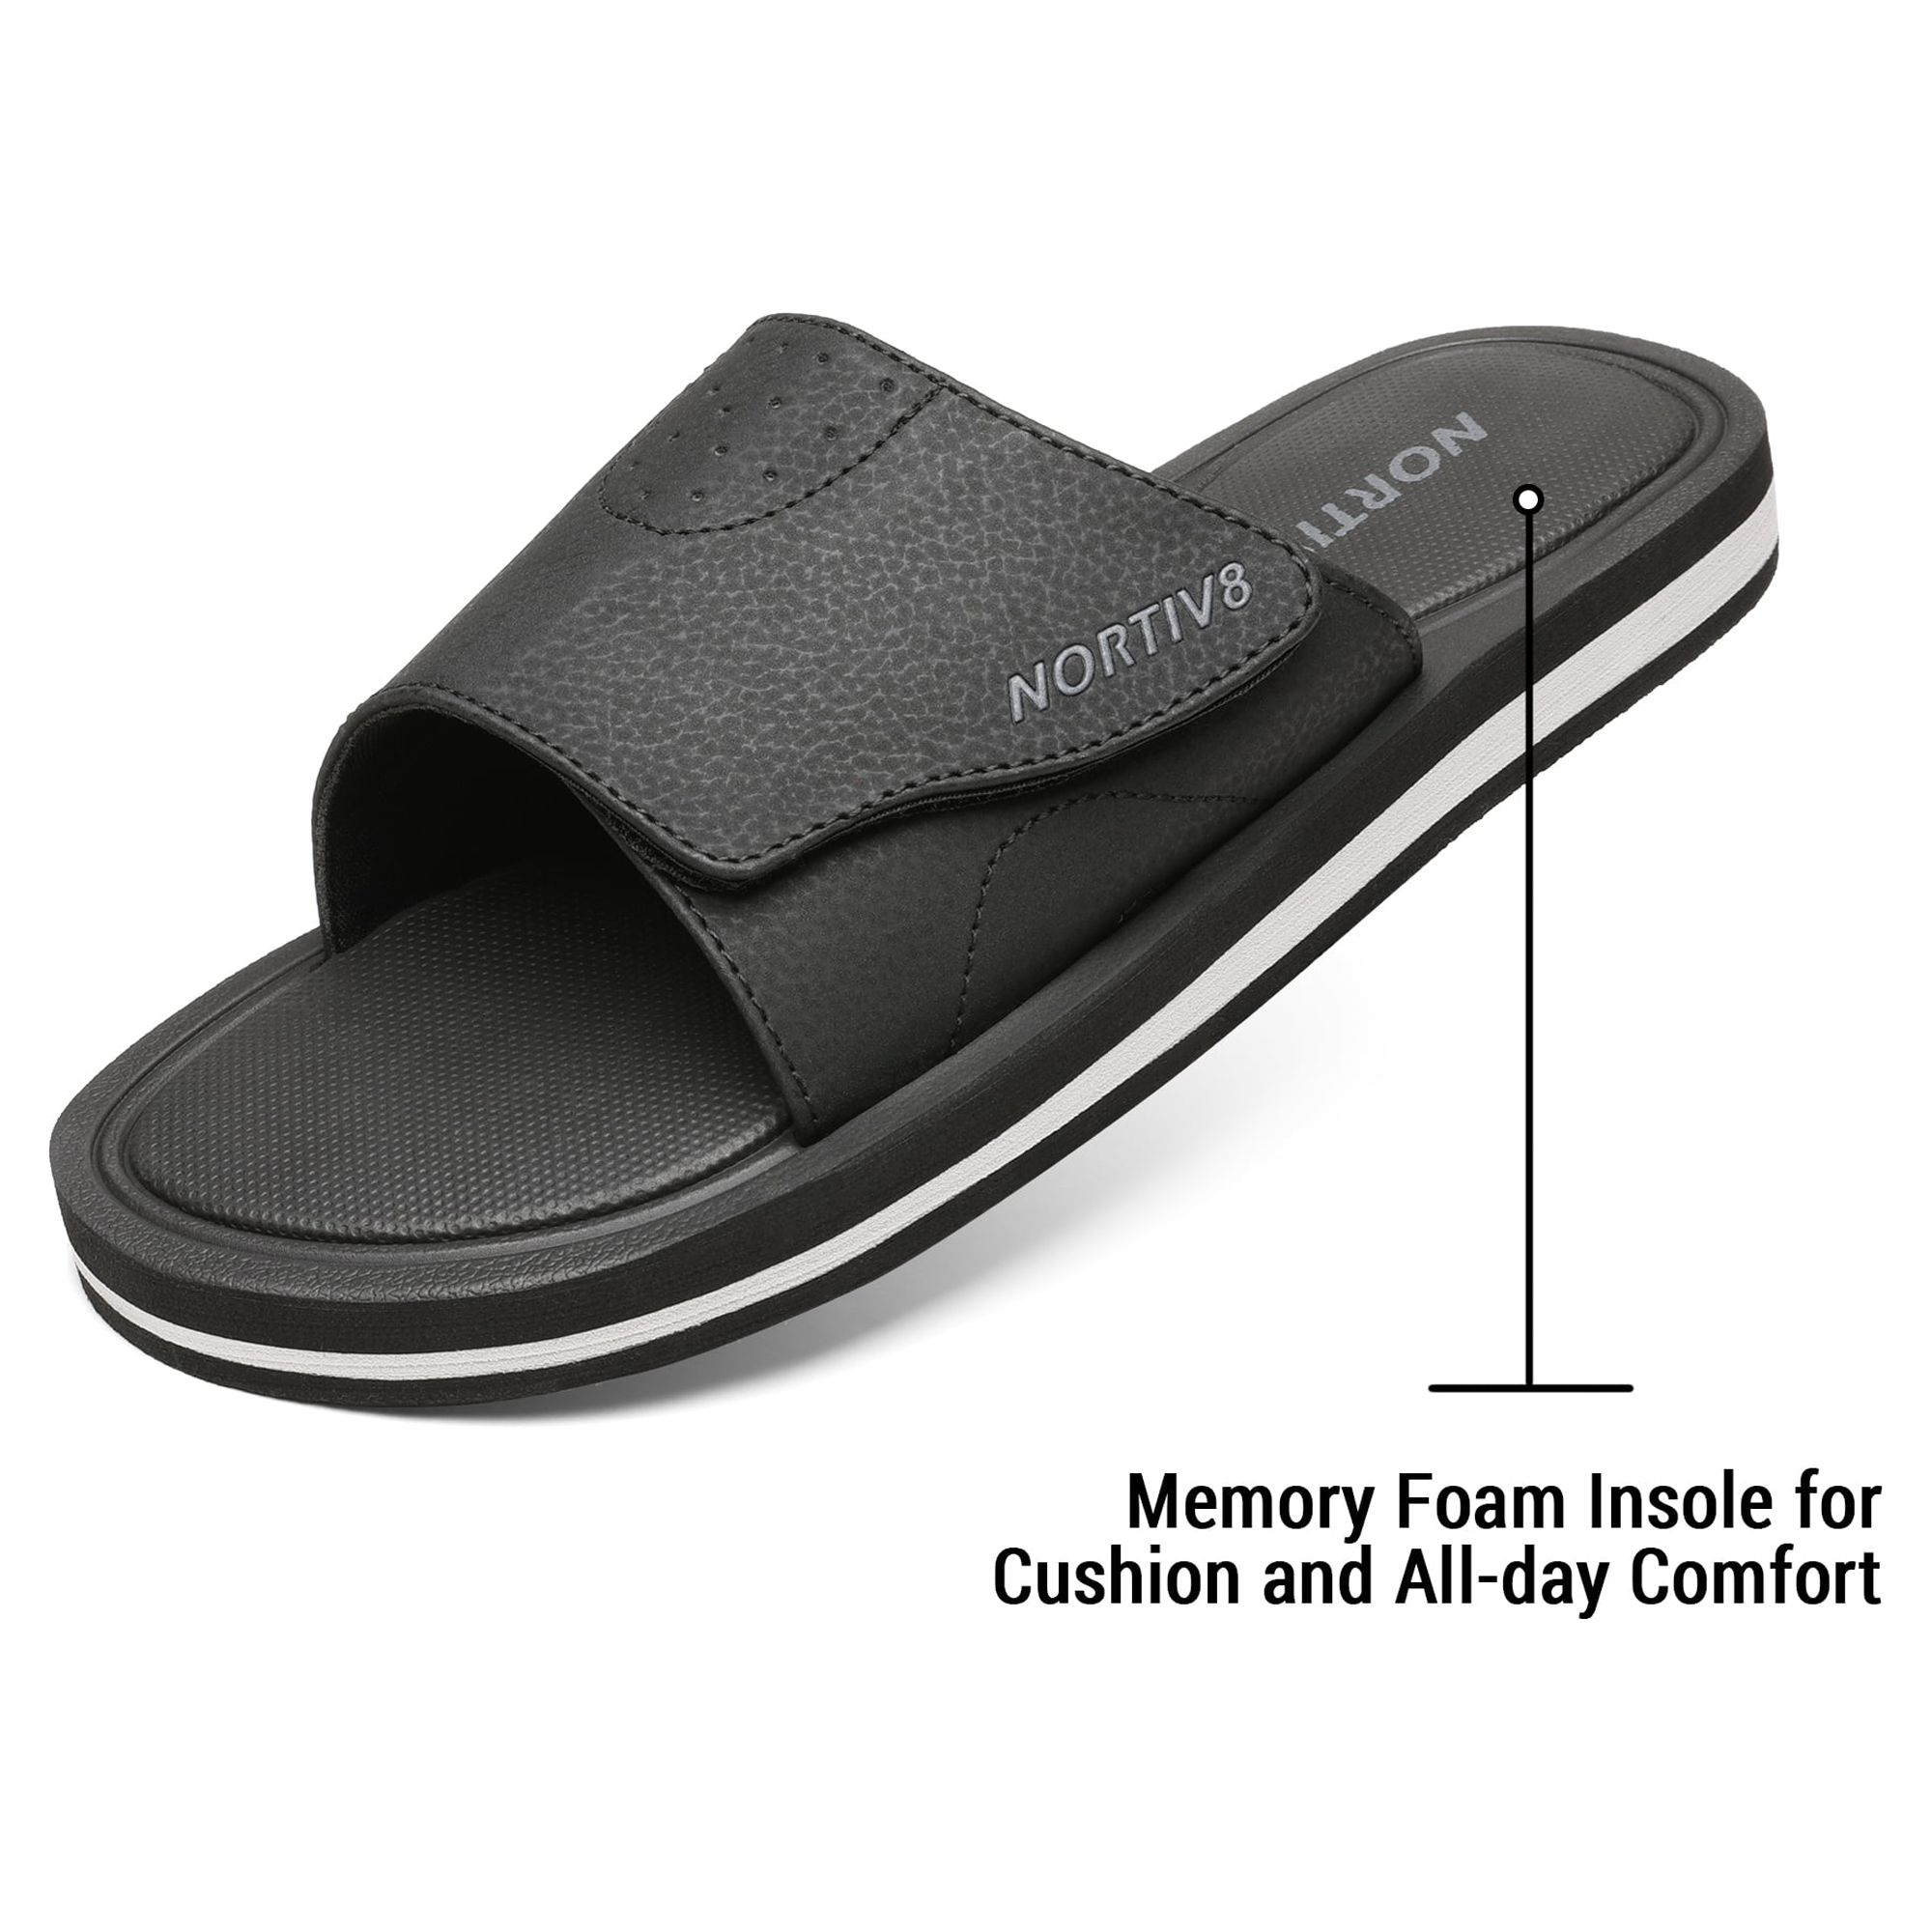 Nortiv8 Men's Memory Foam Adjustable Slide Sandals Comfort Lightweight Summer Beach Sandals Shoes FUSION BLACK Size 10 - image 2 of 5